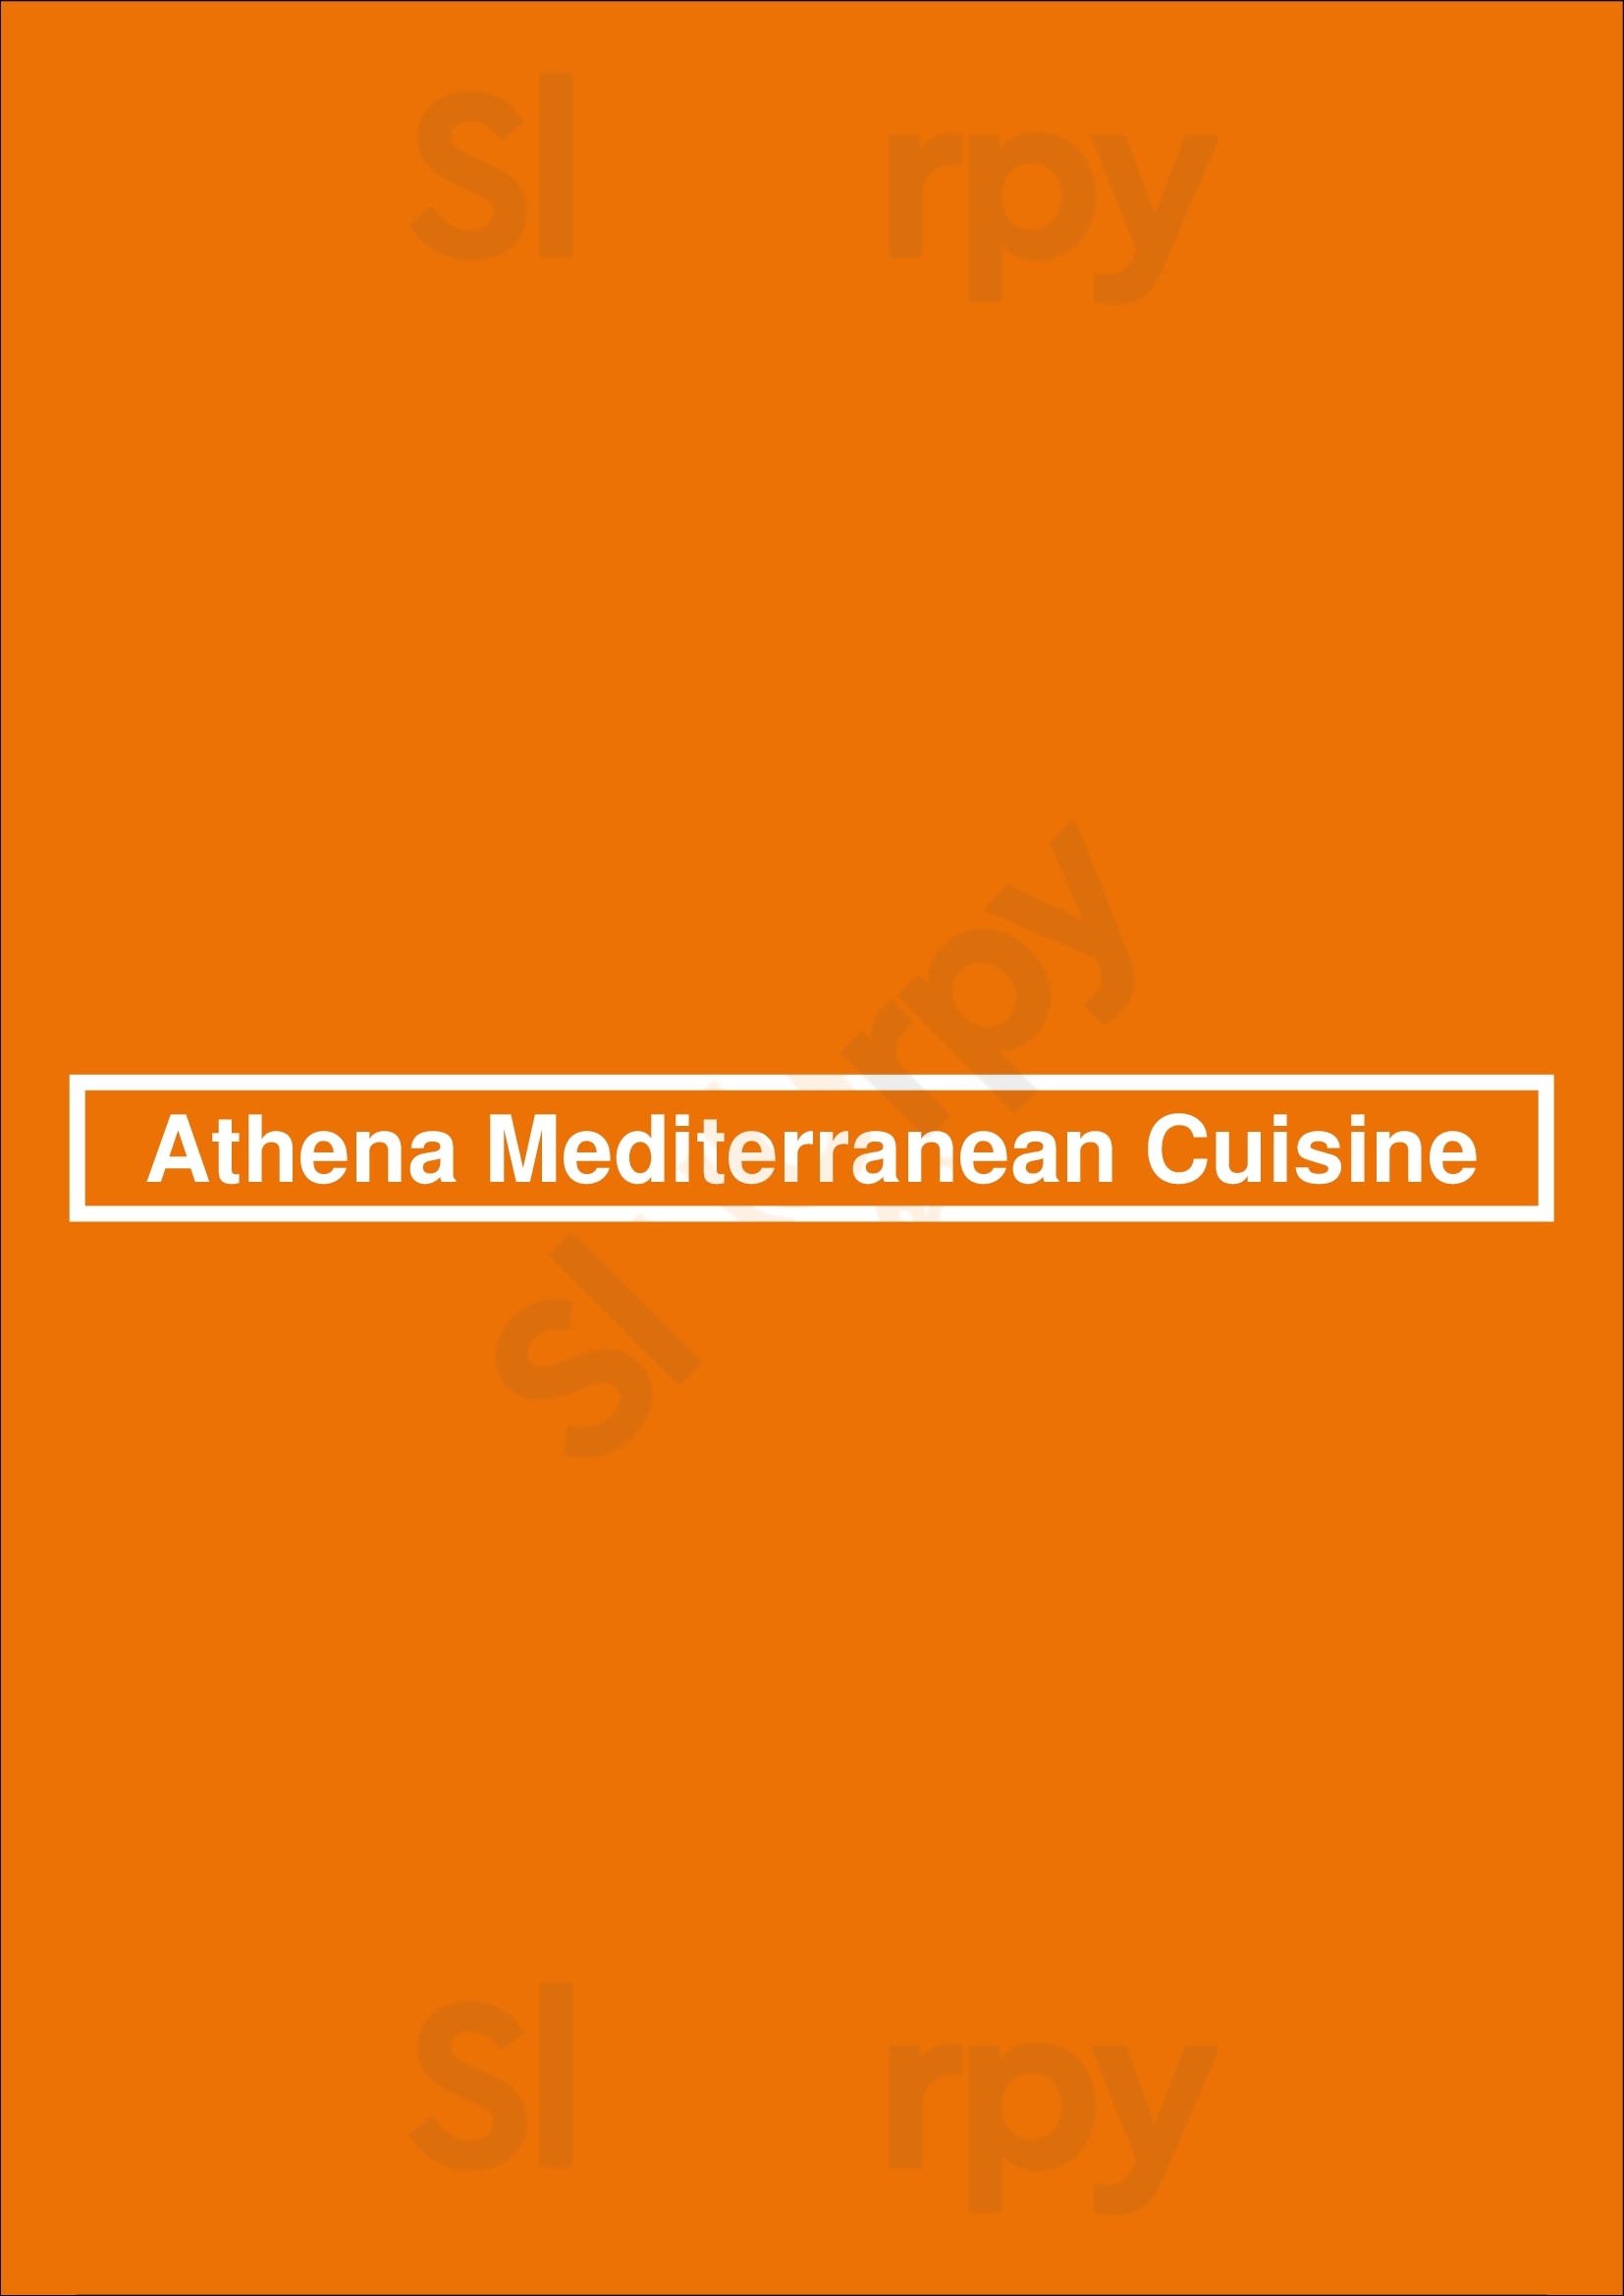 Athena Mediterranean Cuisine Brooklyn Menu - 1